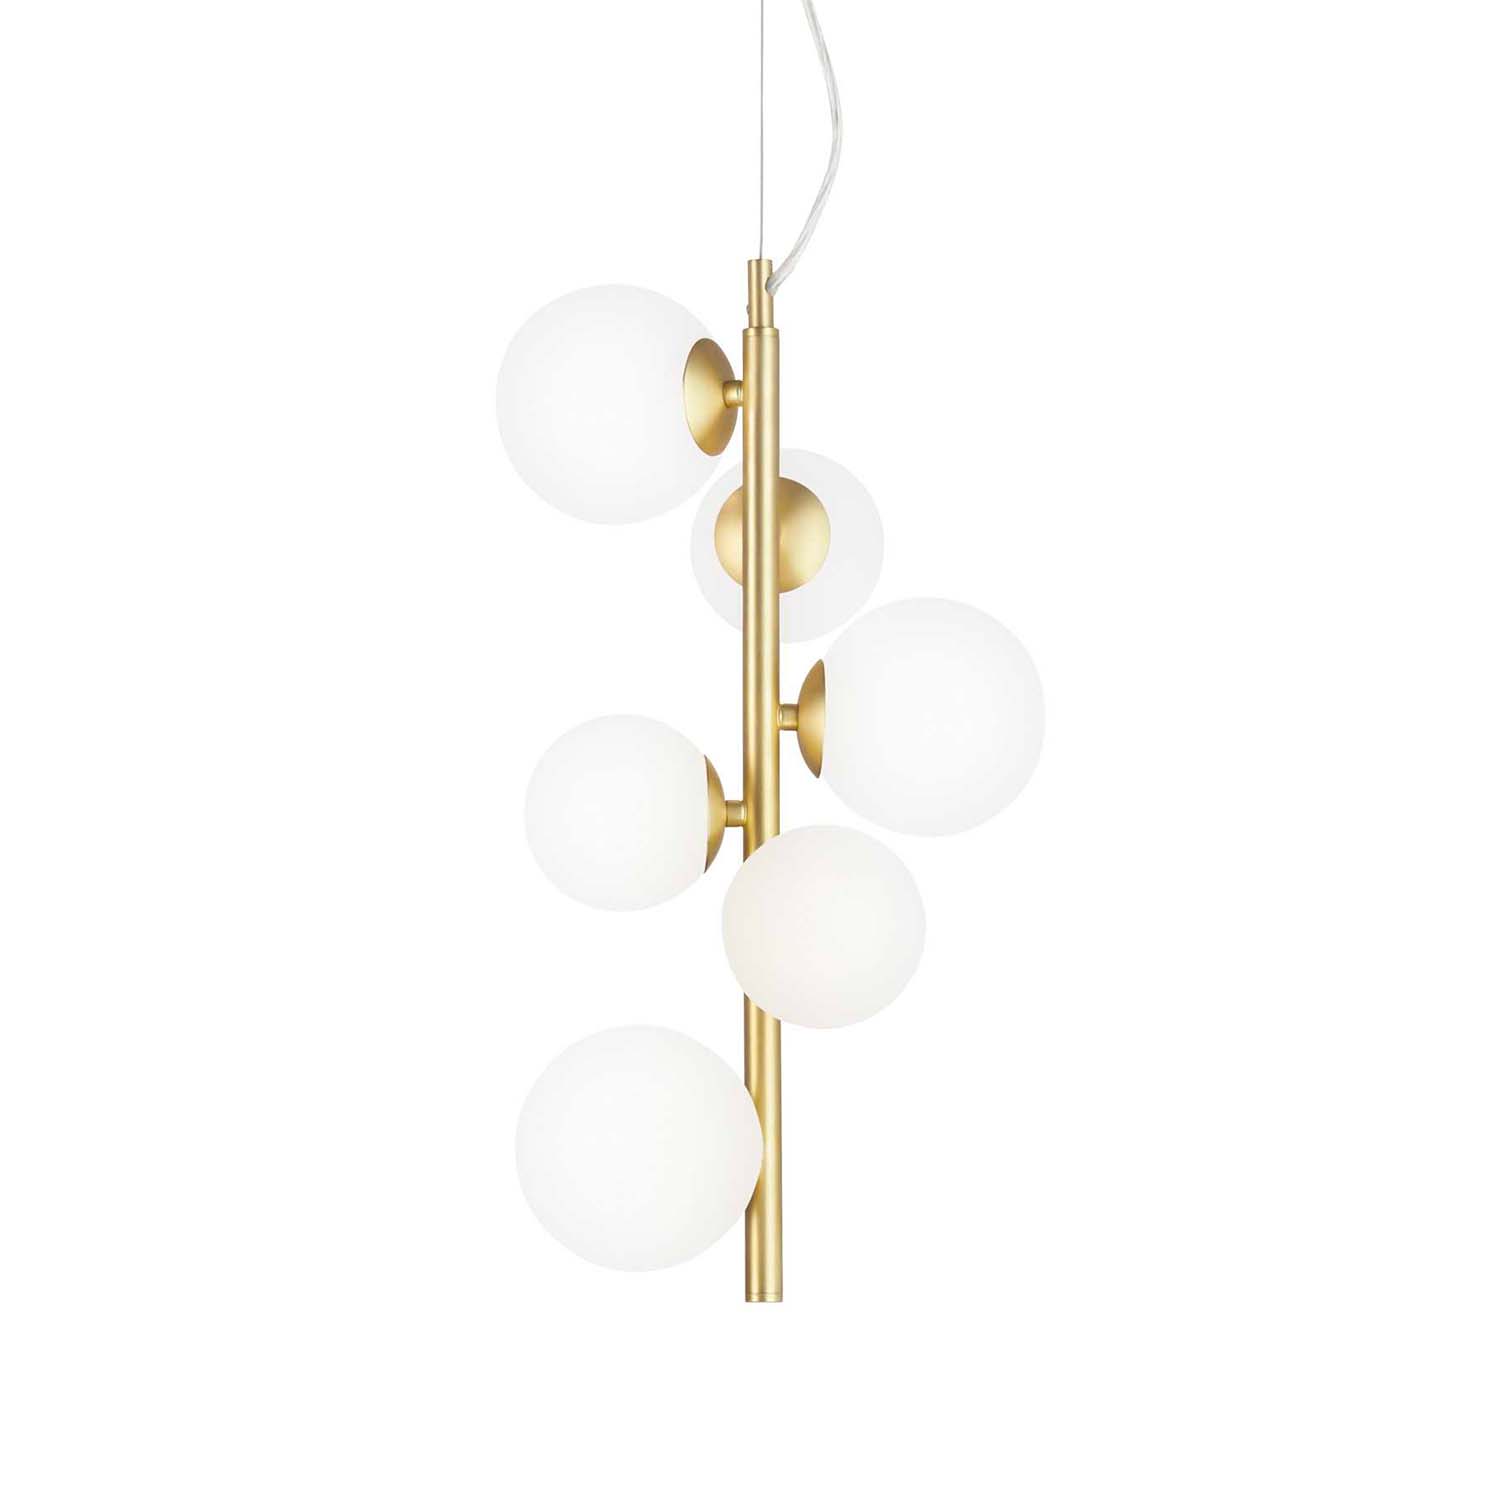 PERLAGE - Vertical pendant light with glass balls